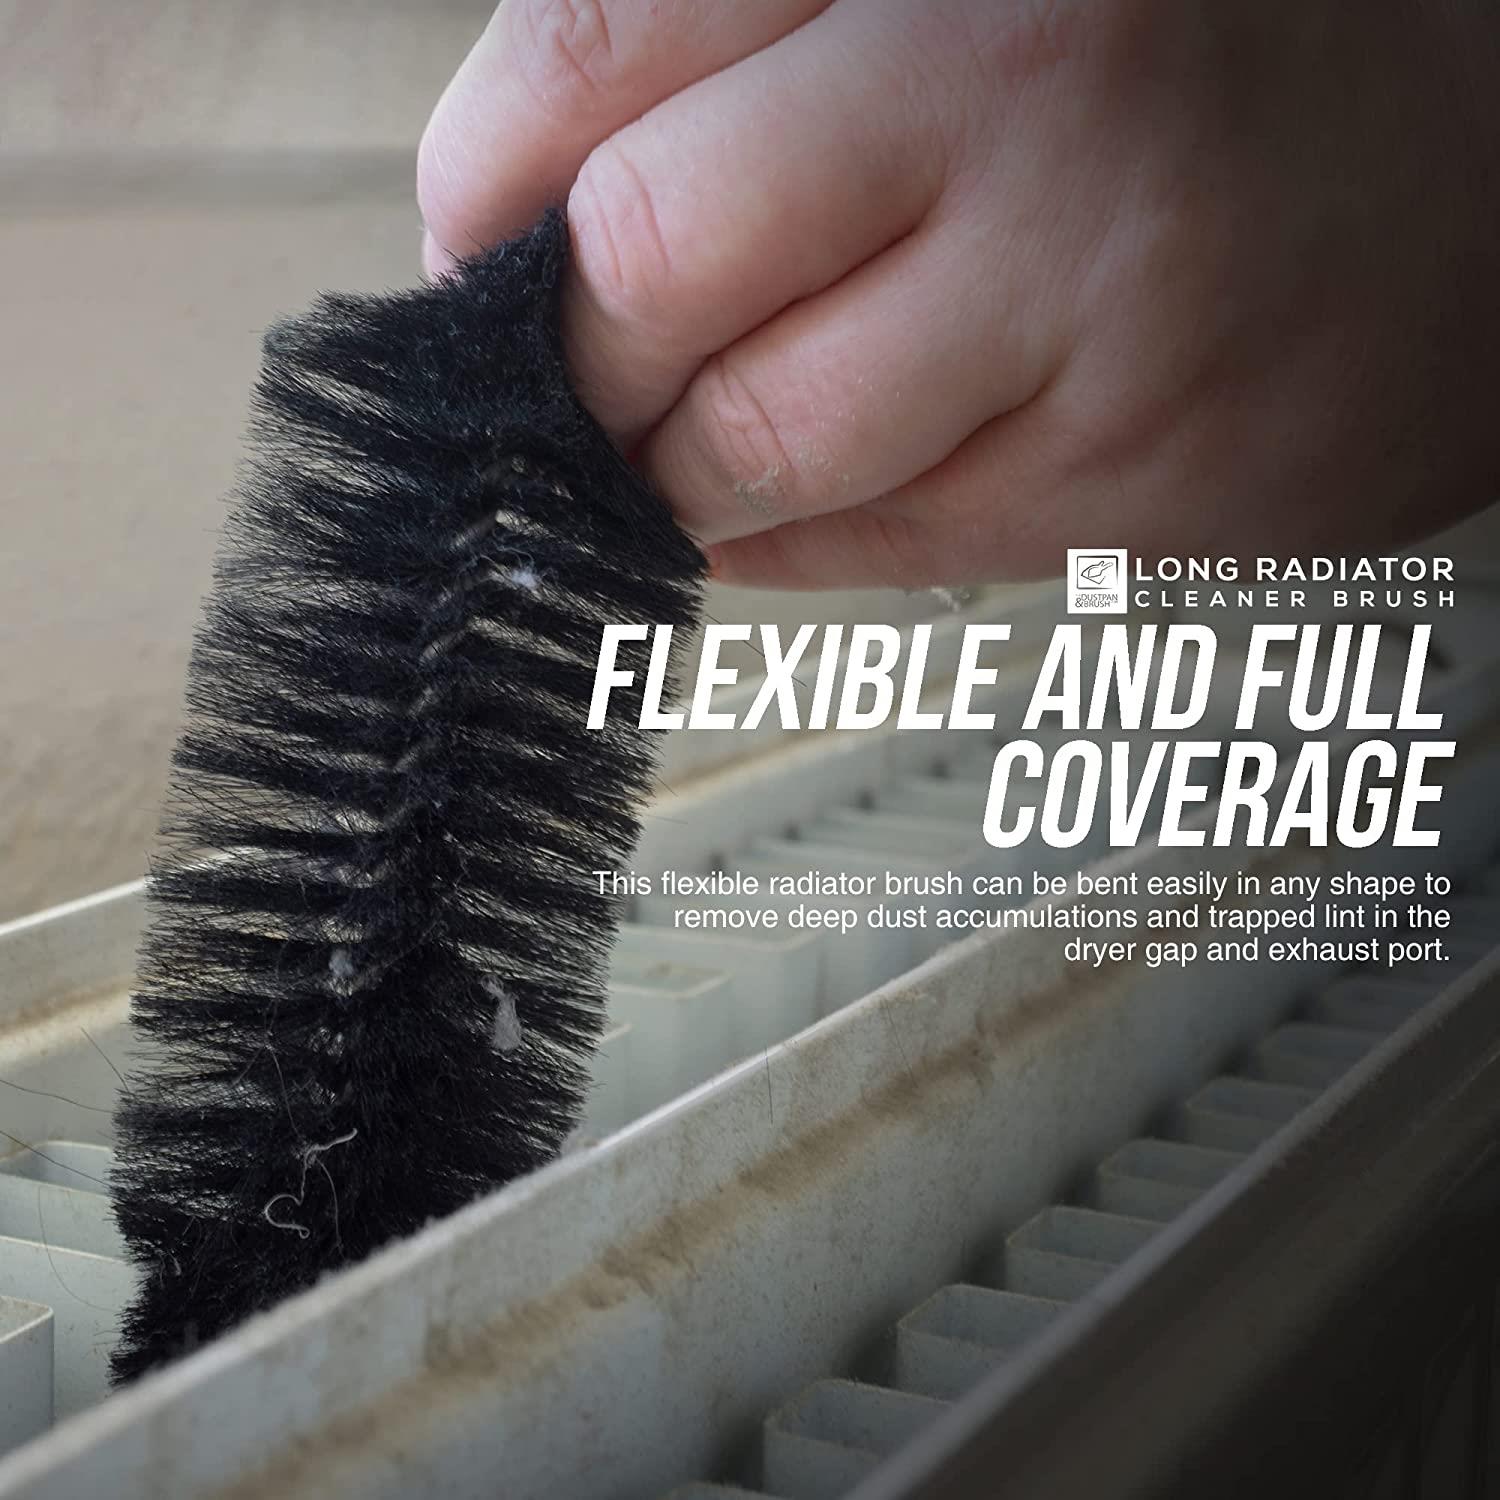 Radiator Cleaning Brush Long Reach Bendy and Flexible Long Handled Brush